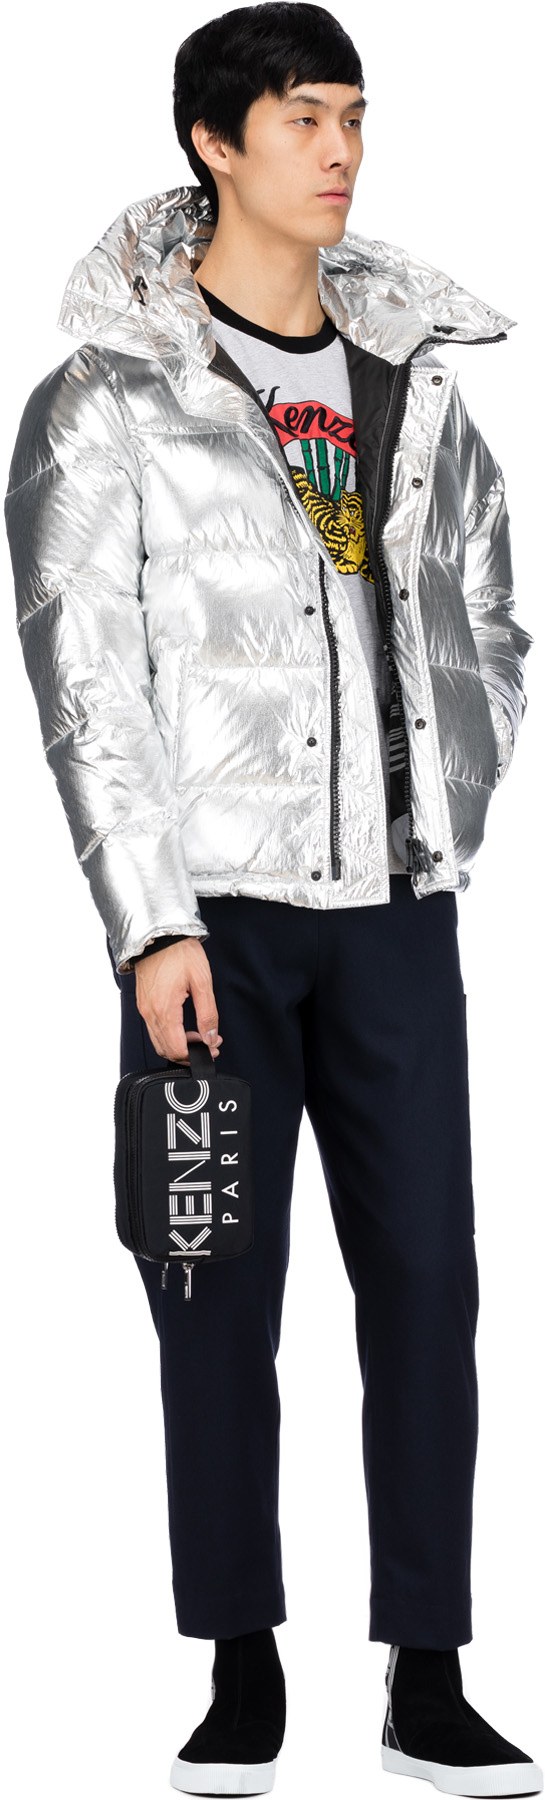 kenzo silver jacket